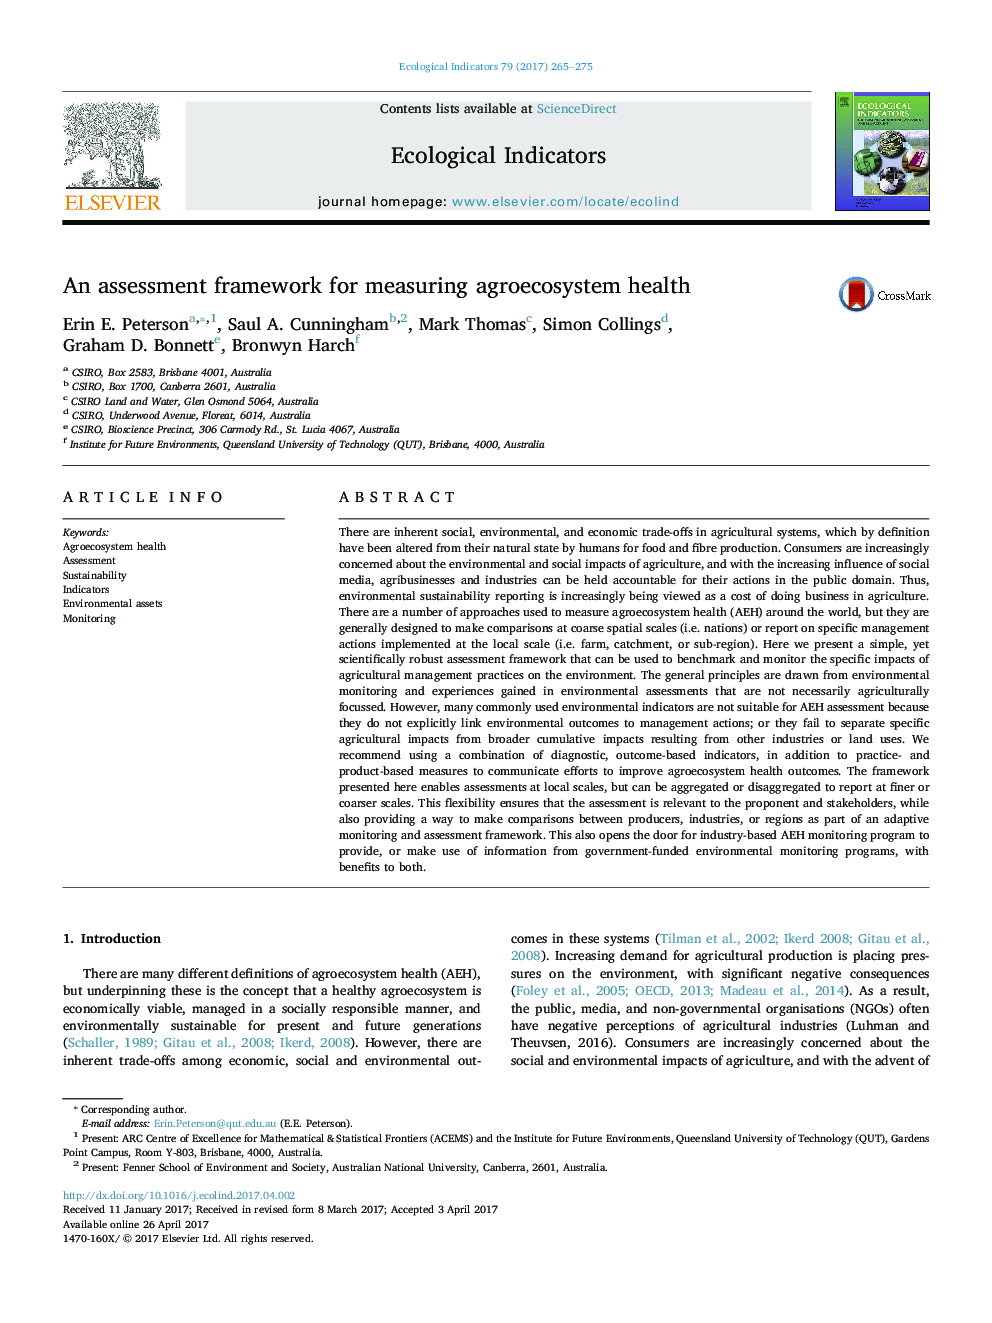 An assessment framework for measuring agroecosystem health